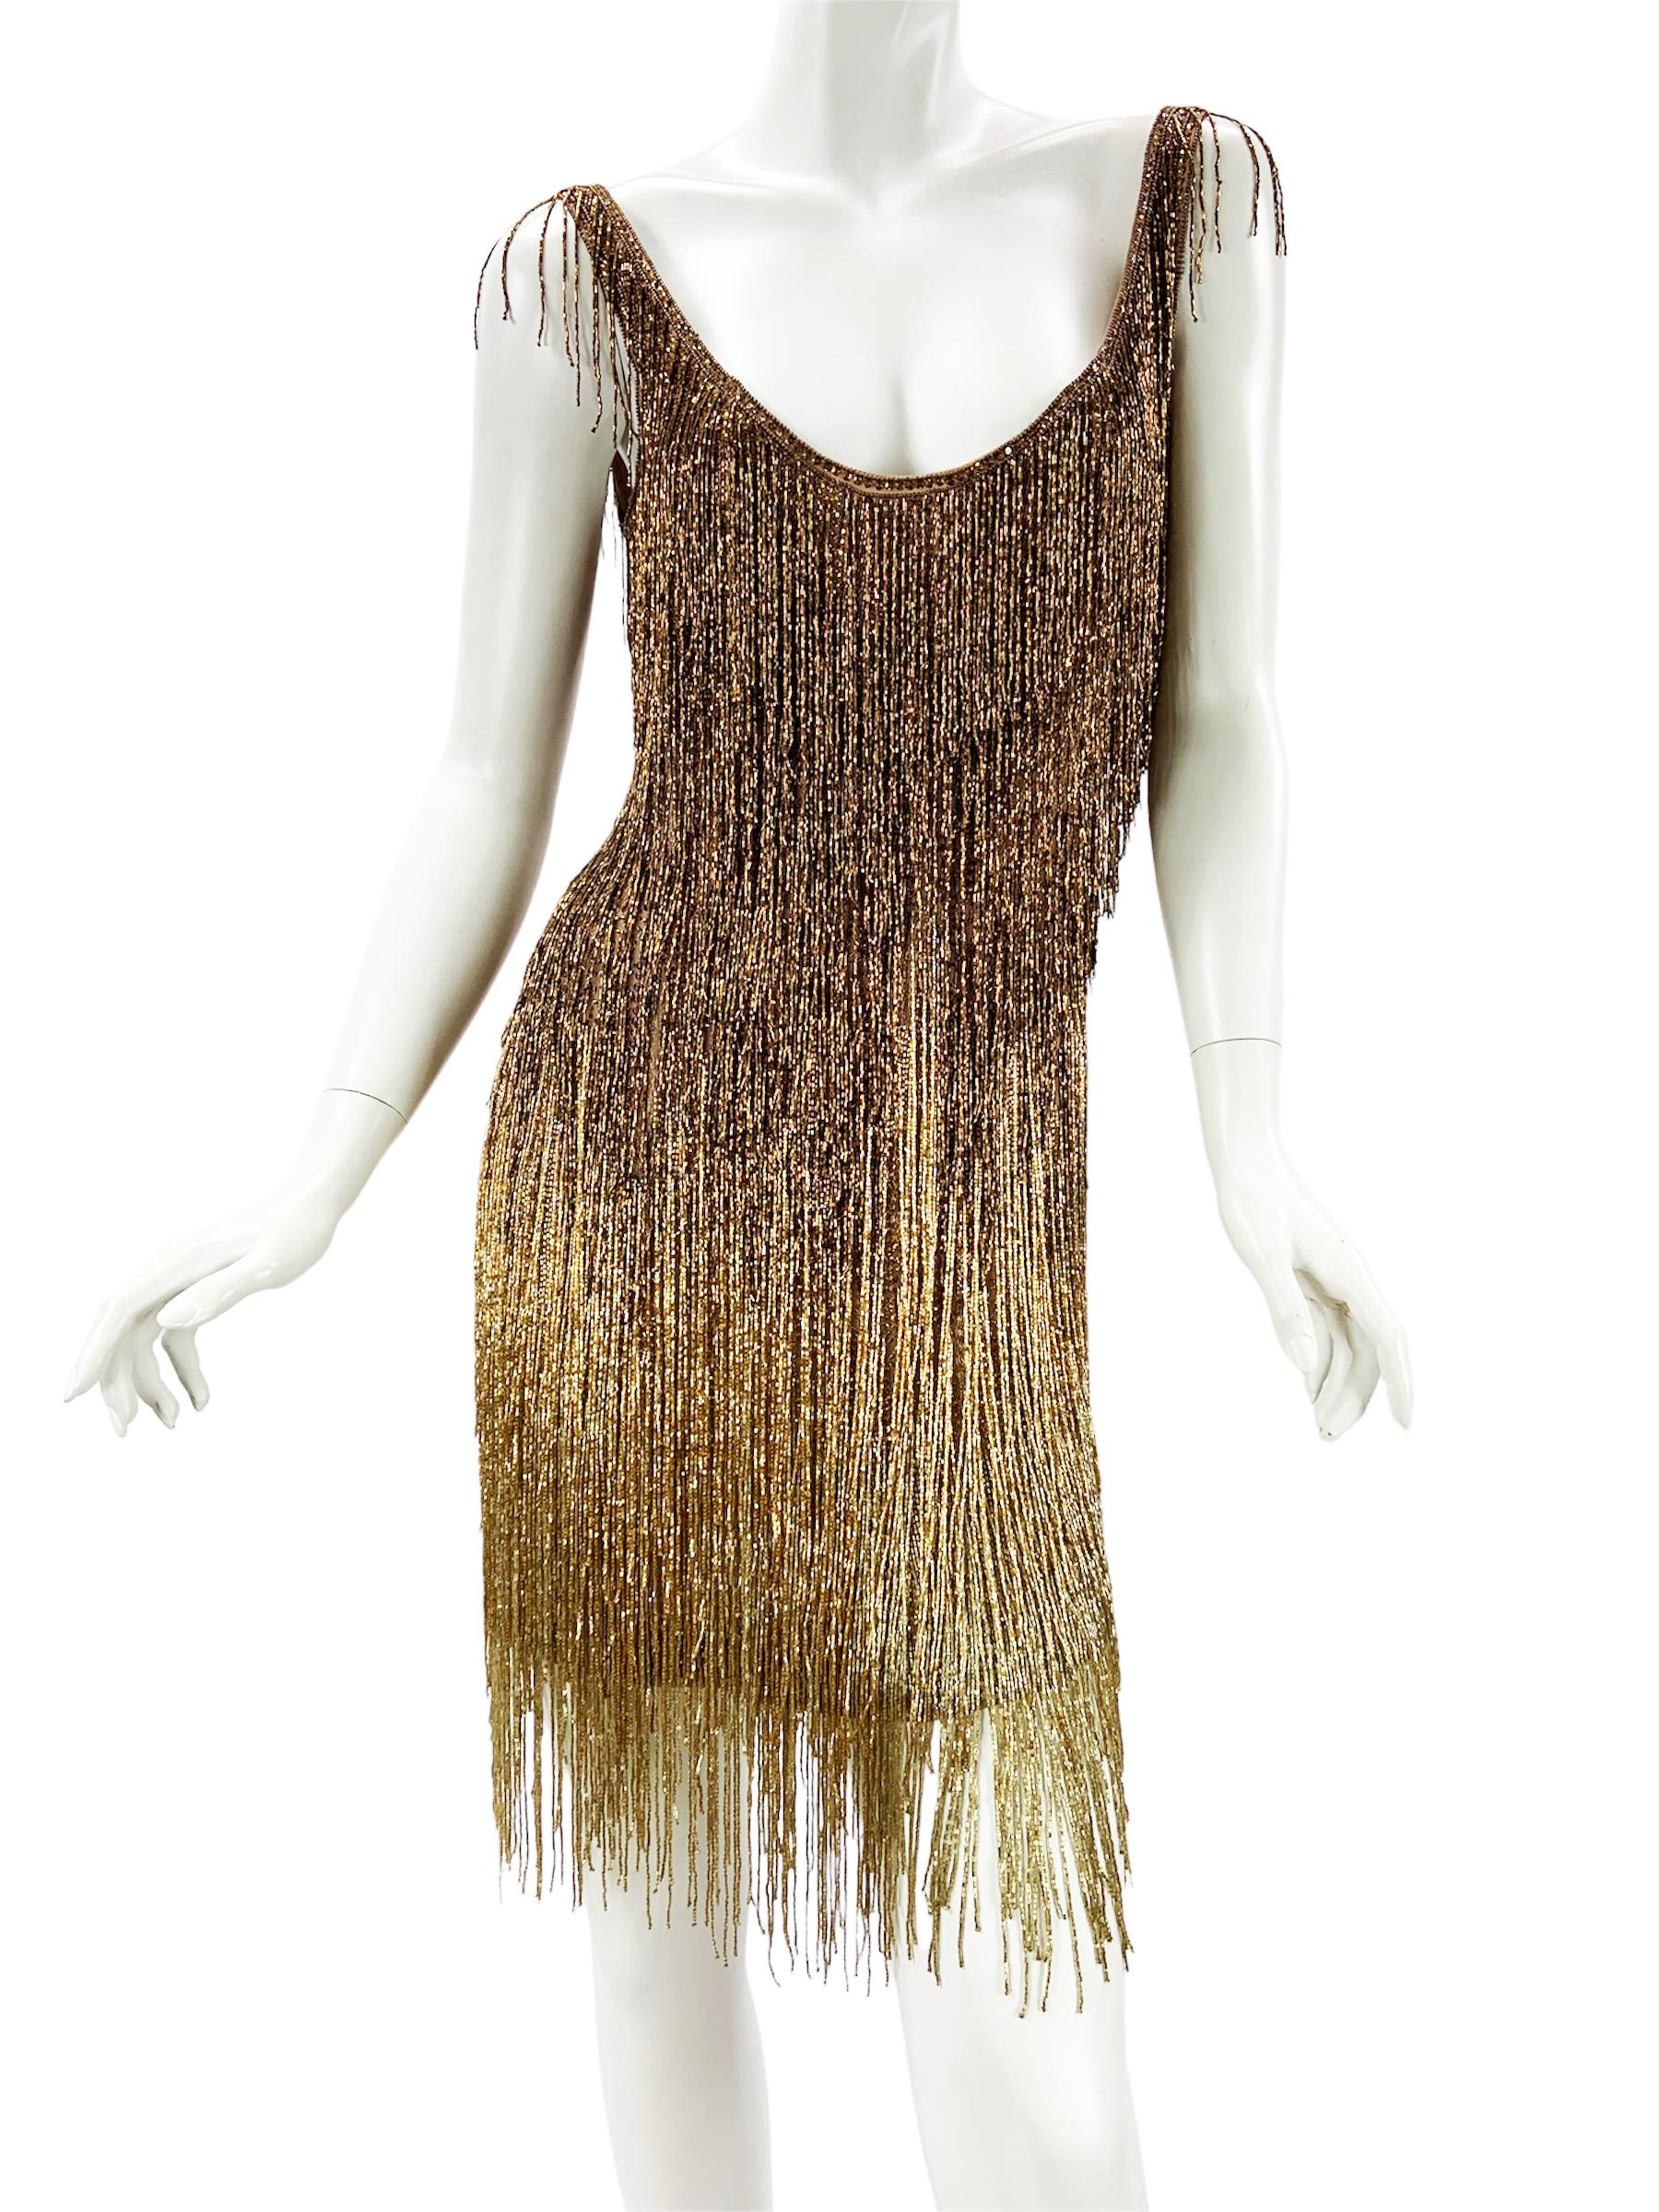 Women's Iconic MUSEUM Roberto Cavalli Fringe Beaded Dress as seen on TAYLOR SWIFT It. 40